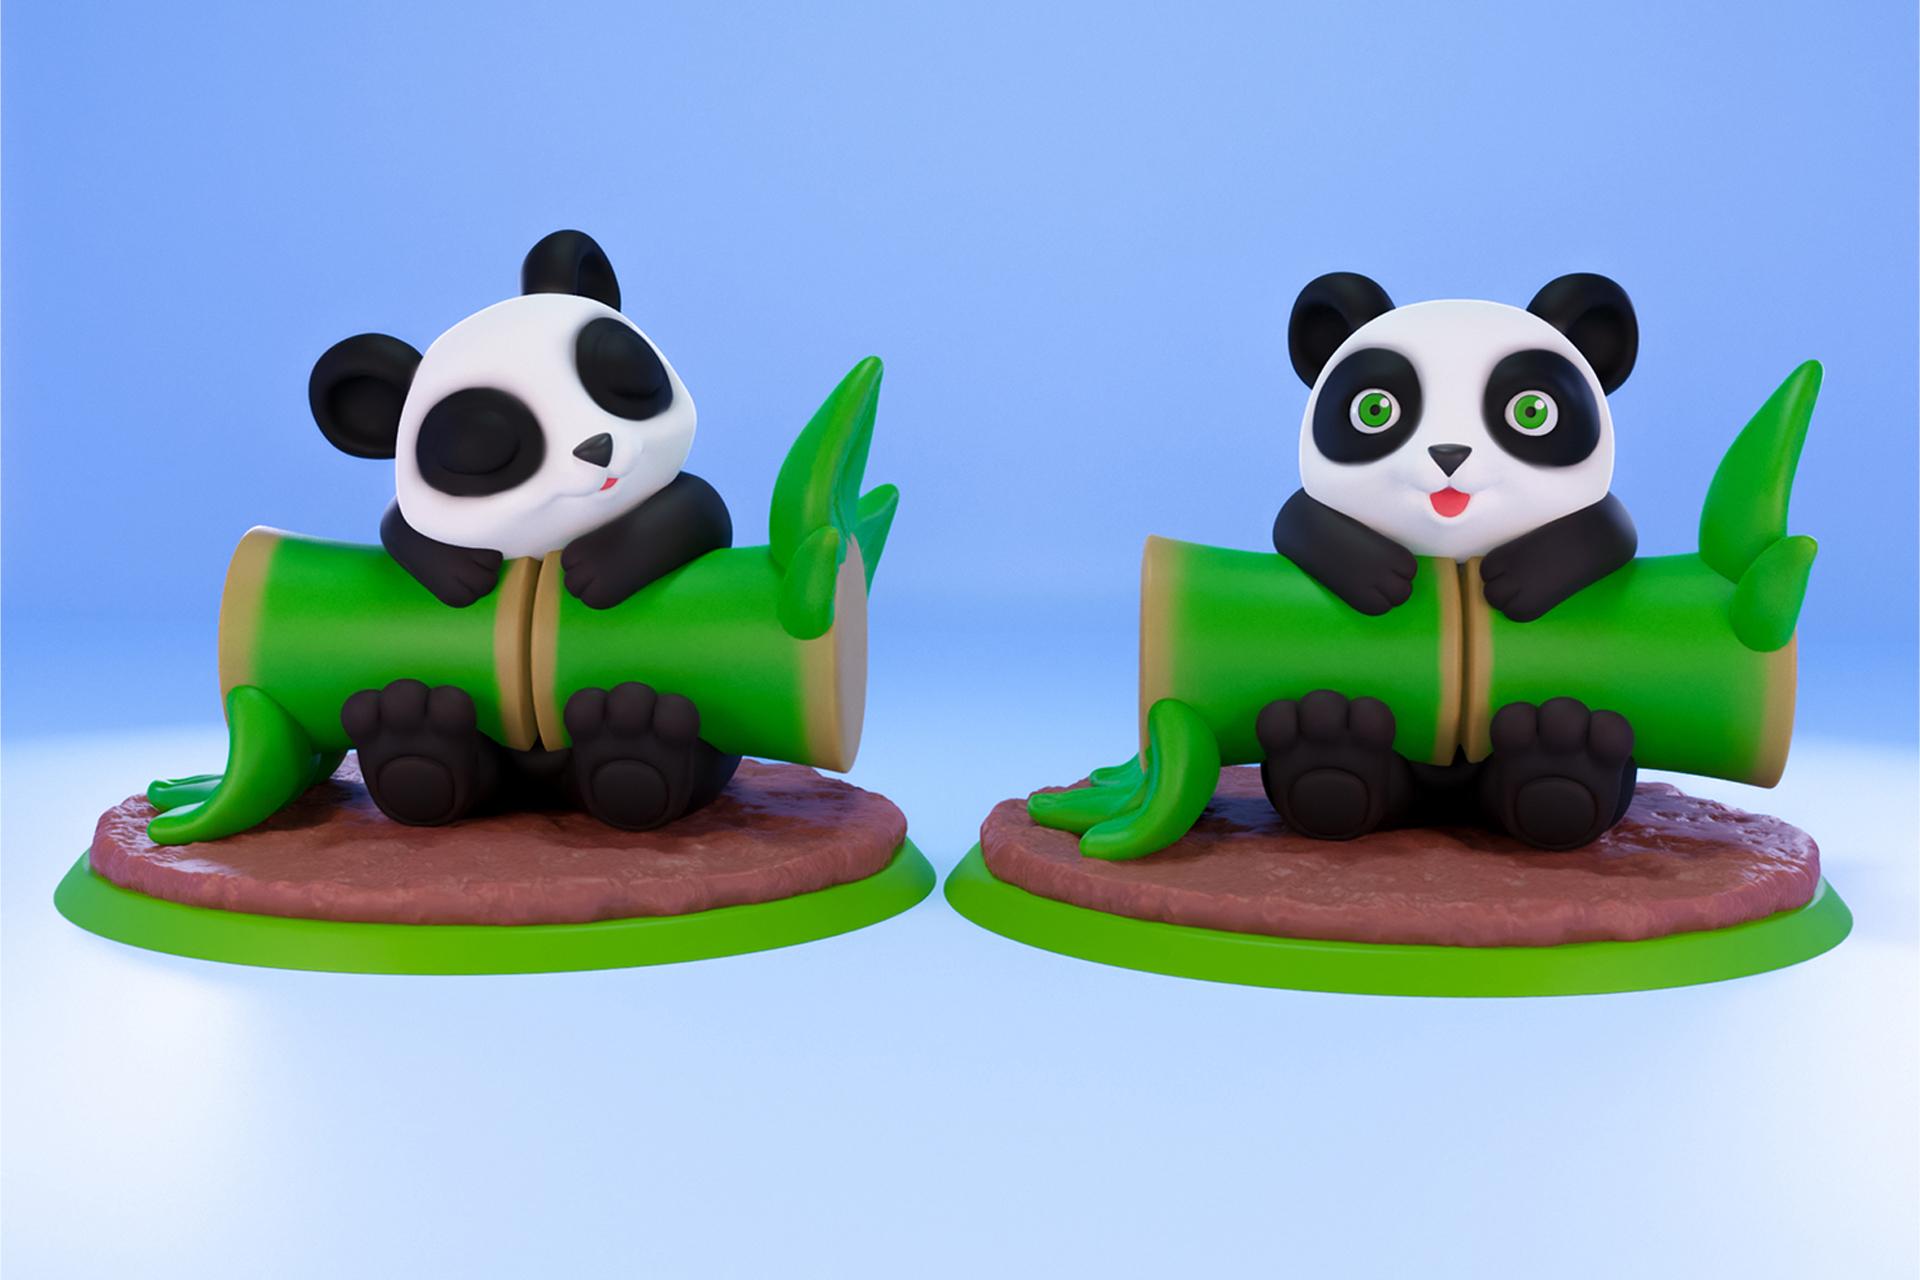 Pochoo The Panda (Smiley and Sleepy)